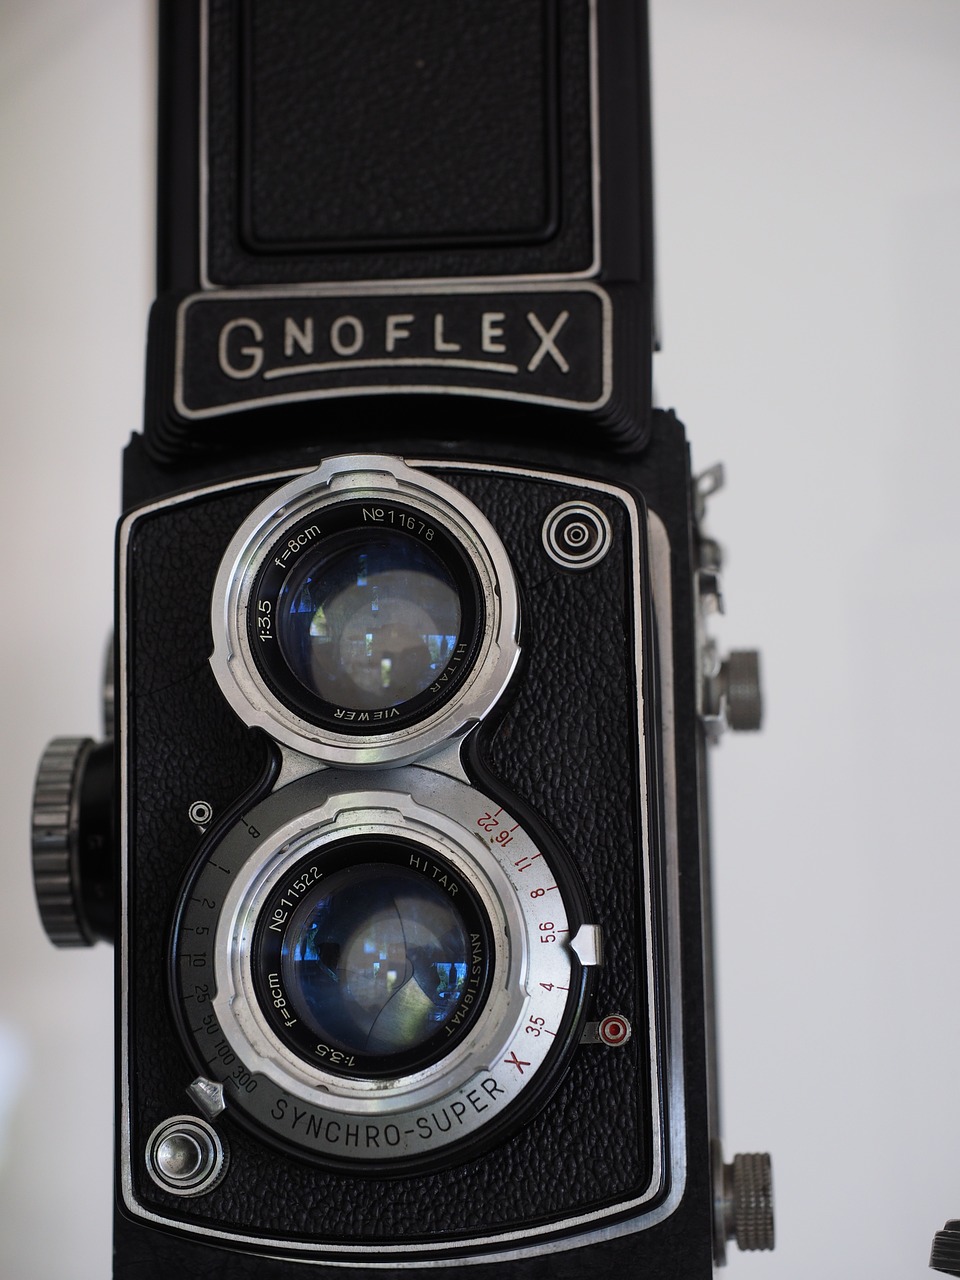 camera  gnoflex  old free photo